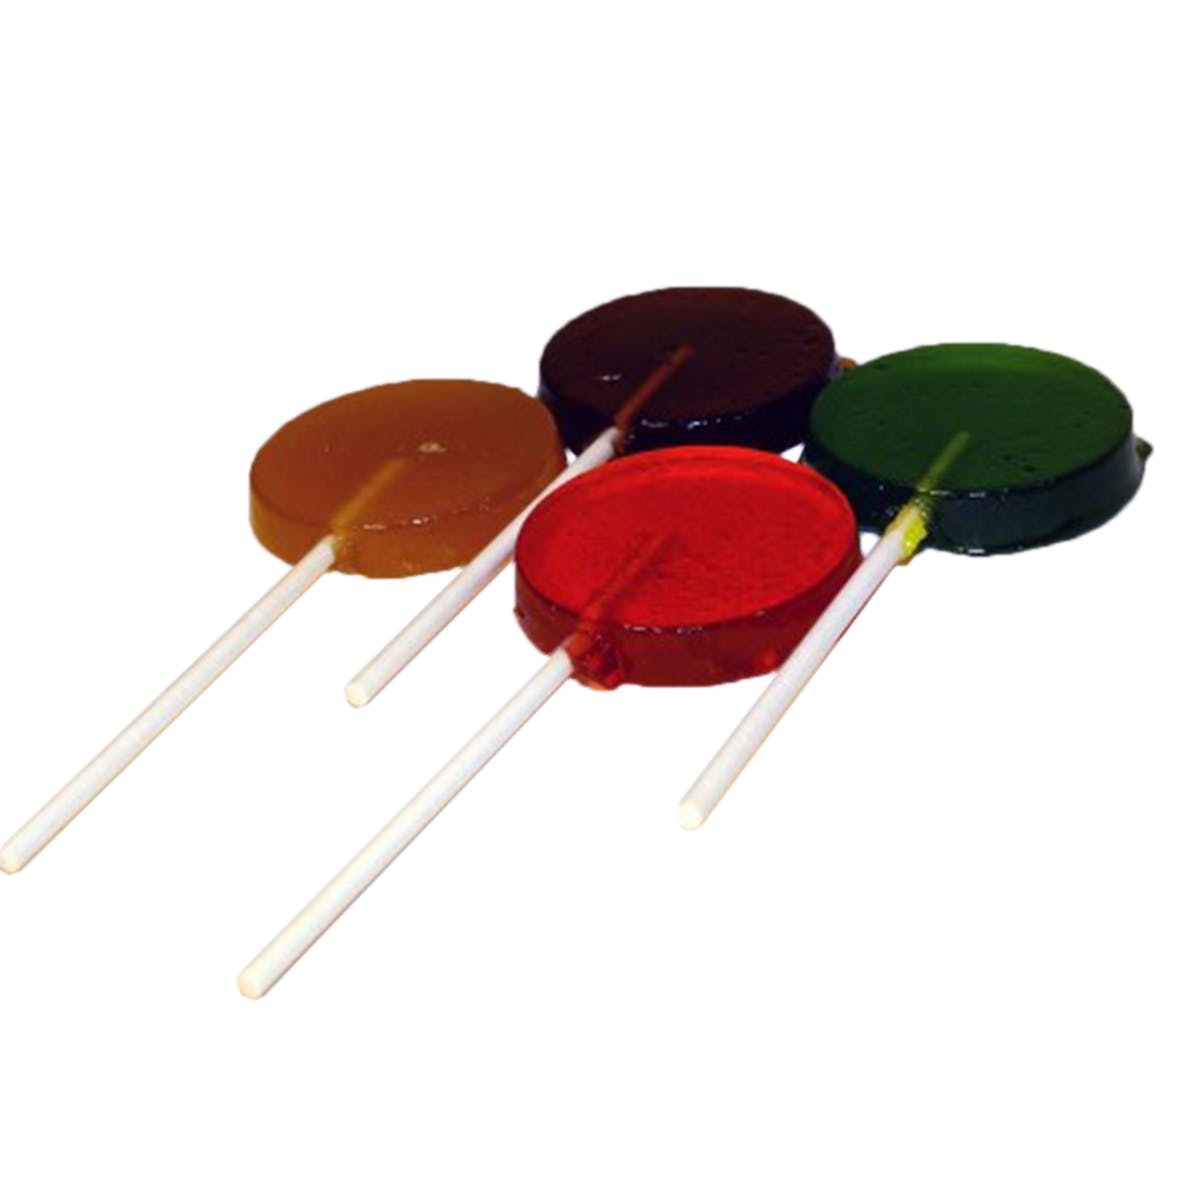 Suck-It Lollipops, Pack of 4